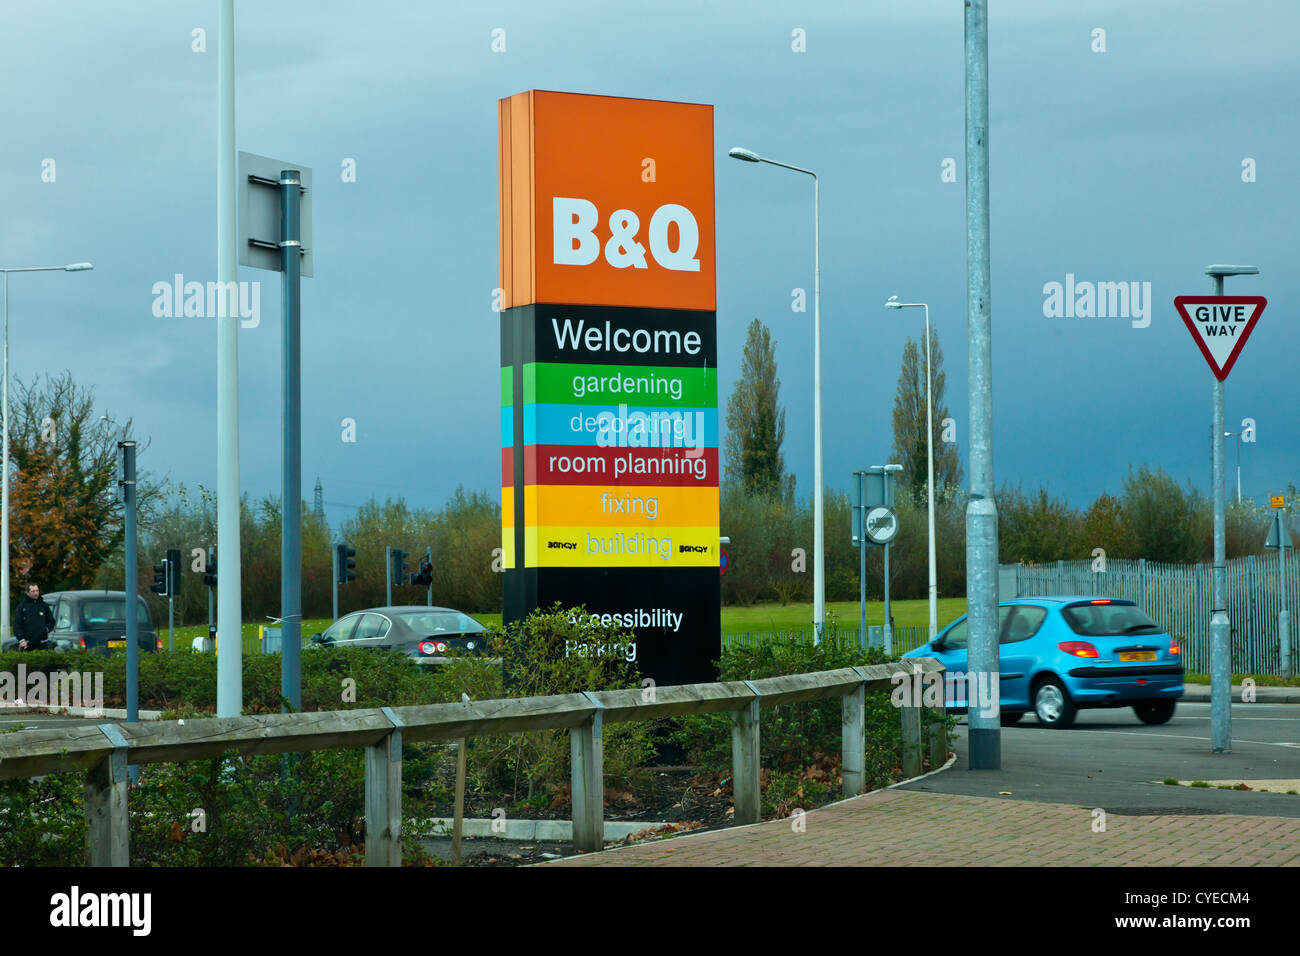 B&Q diy superstore, Corporation Rd, Newport, Wales, UK. Stock Photo